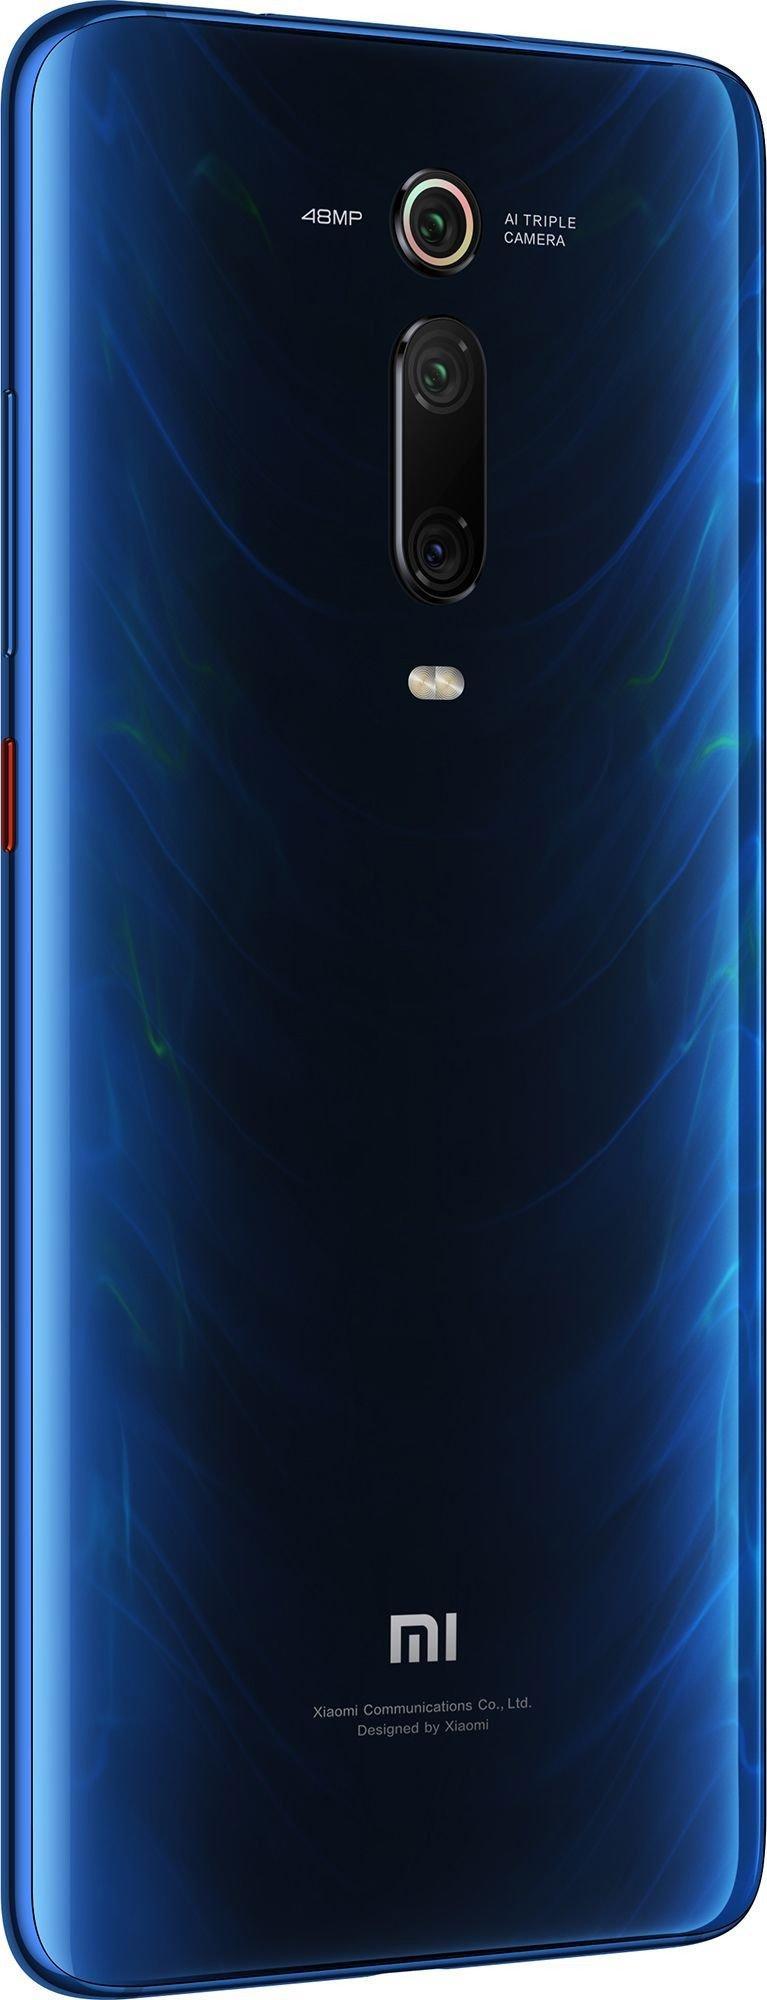 Купить Смартфон Xiaomi Mi 9T Pro 6/64Gb Glacier Blue